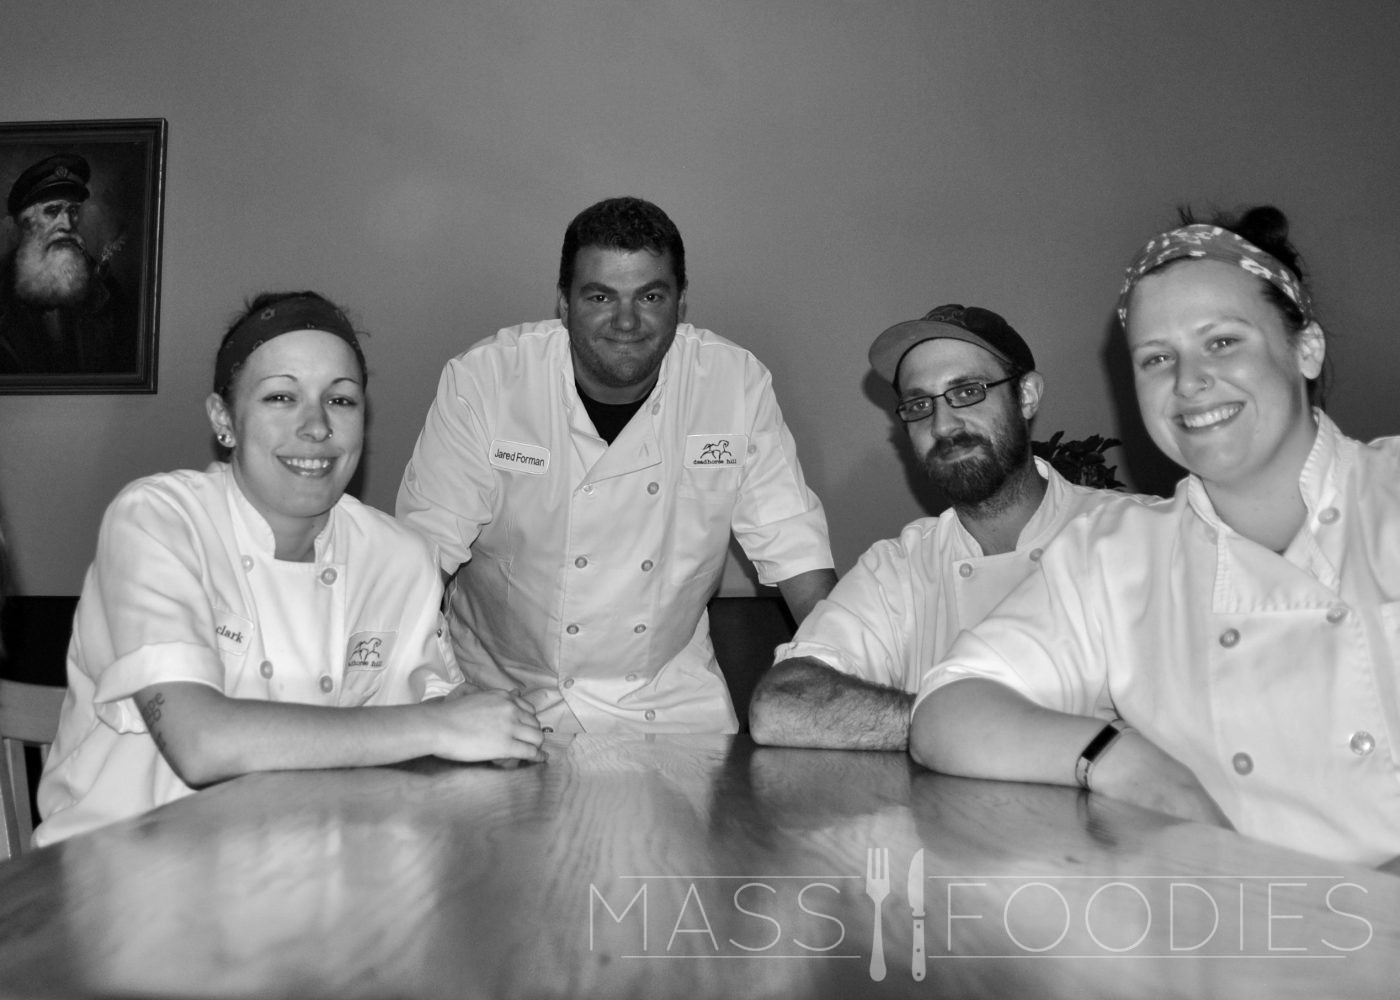 deadhorse hill's culinary team: Chef de cuisine Robin Clark, Executive Chef Jared Forman, Nathan Sanden, and new addition, Erin Hockey